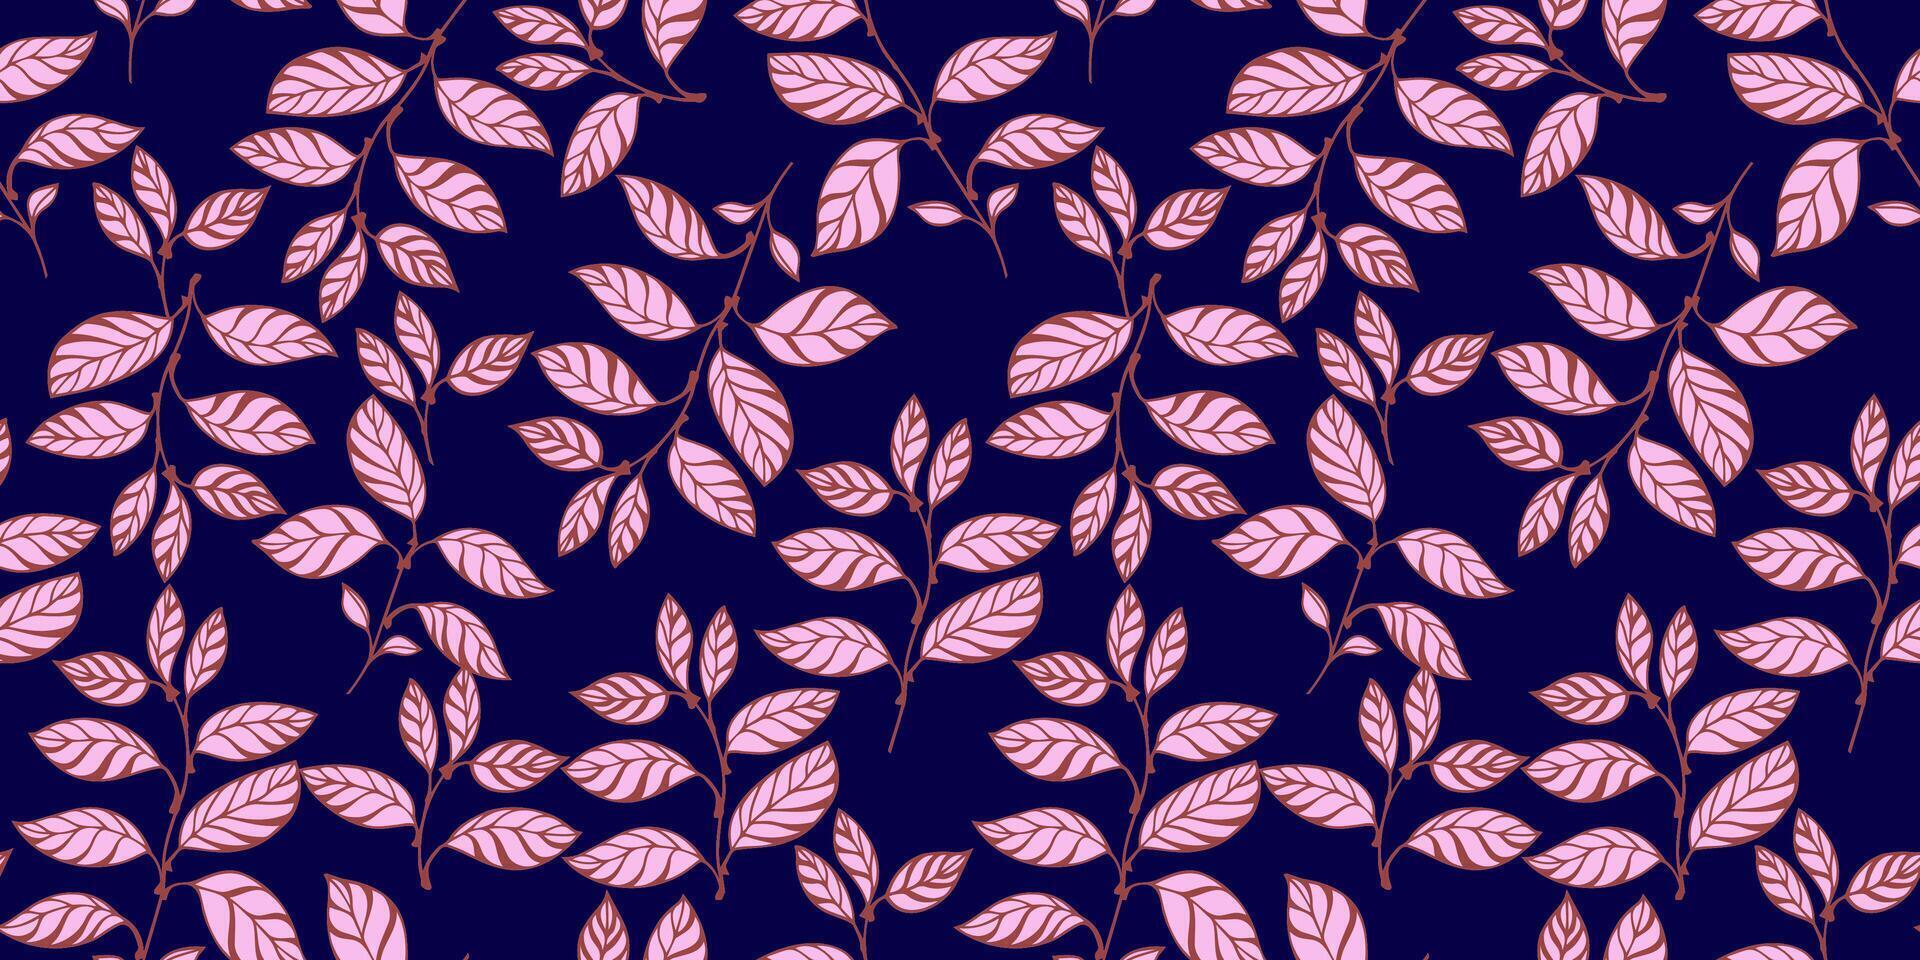 creativo, abstracto, brillante hojas ramas entrelazados en un sin costura modelo. vector dibujado ilustración forma hoja tallos. estilizado tropical floral en un oscuro azul antecedentes. modelo para diseño